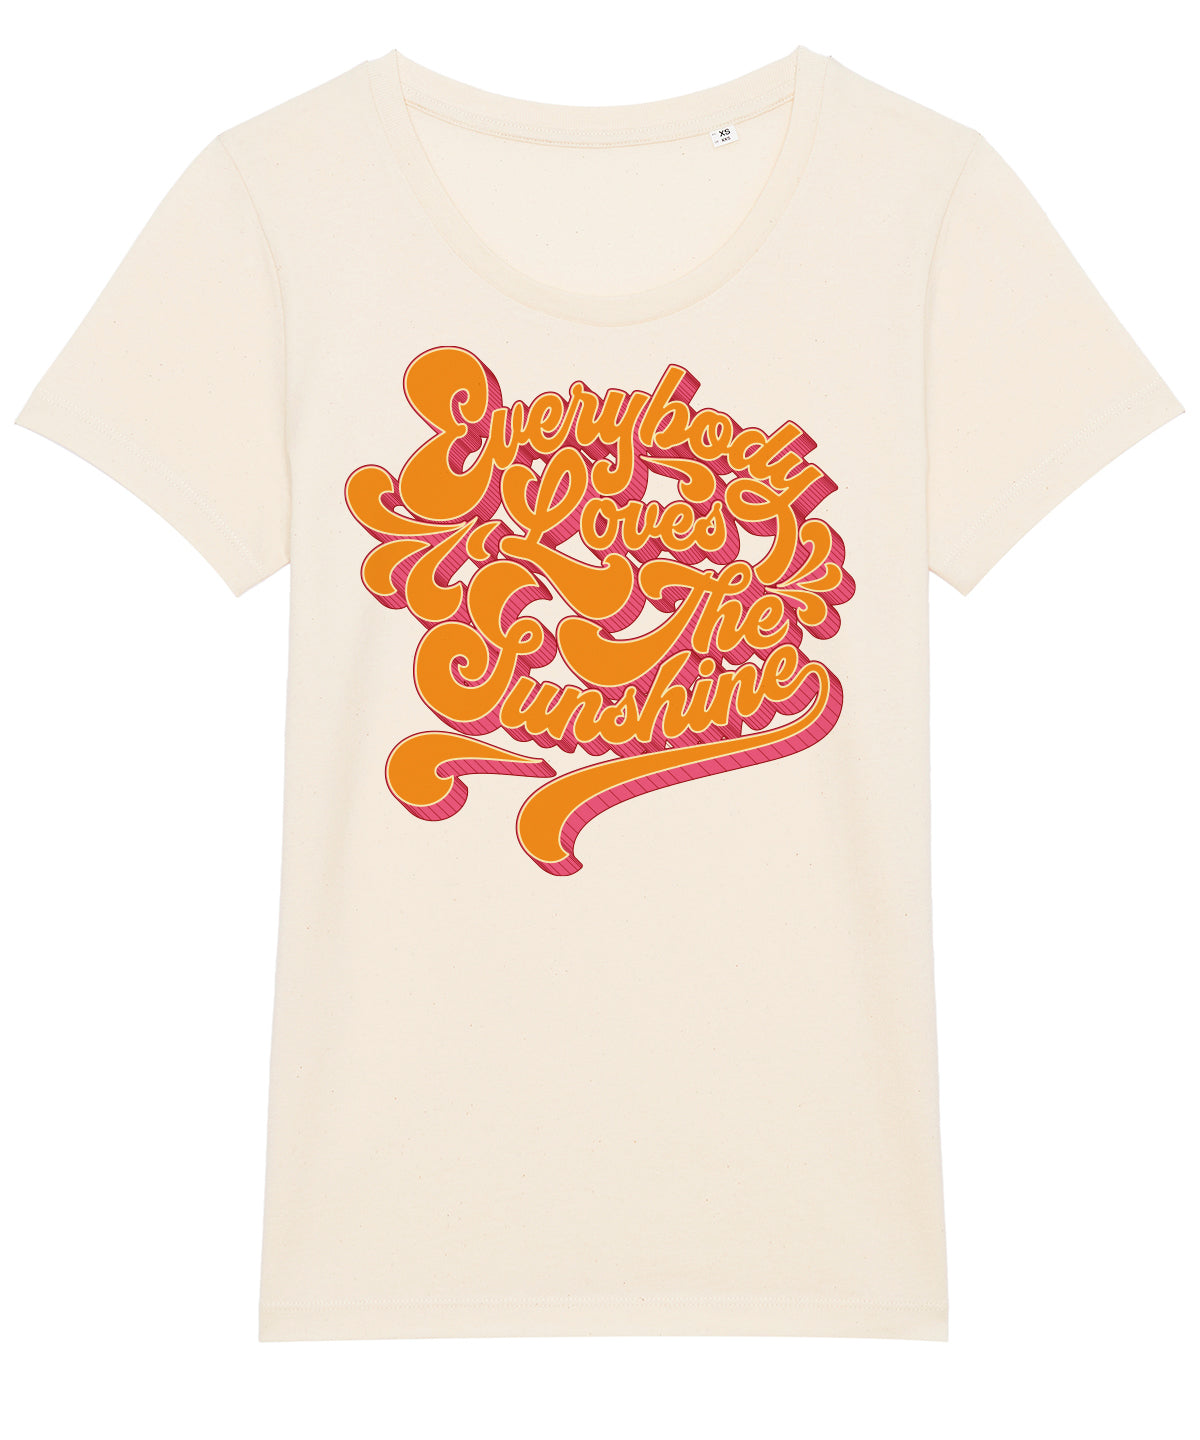 Everybody Loves The Sunshine T-Shirt